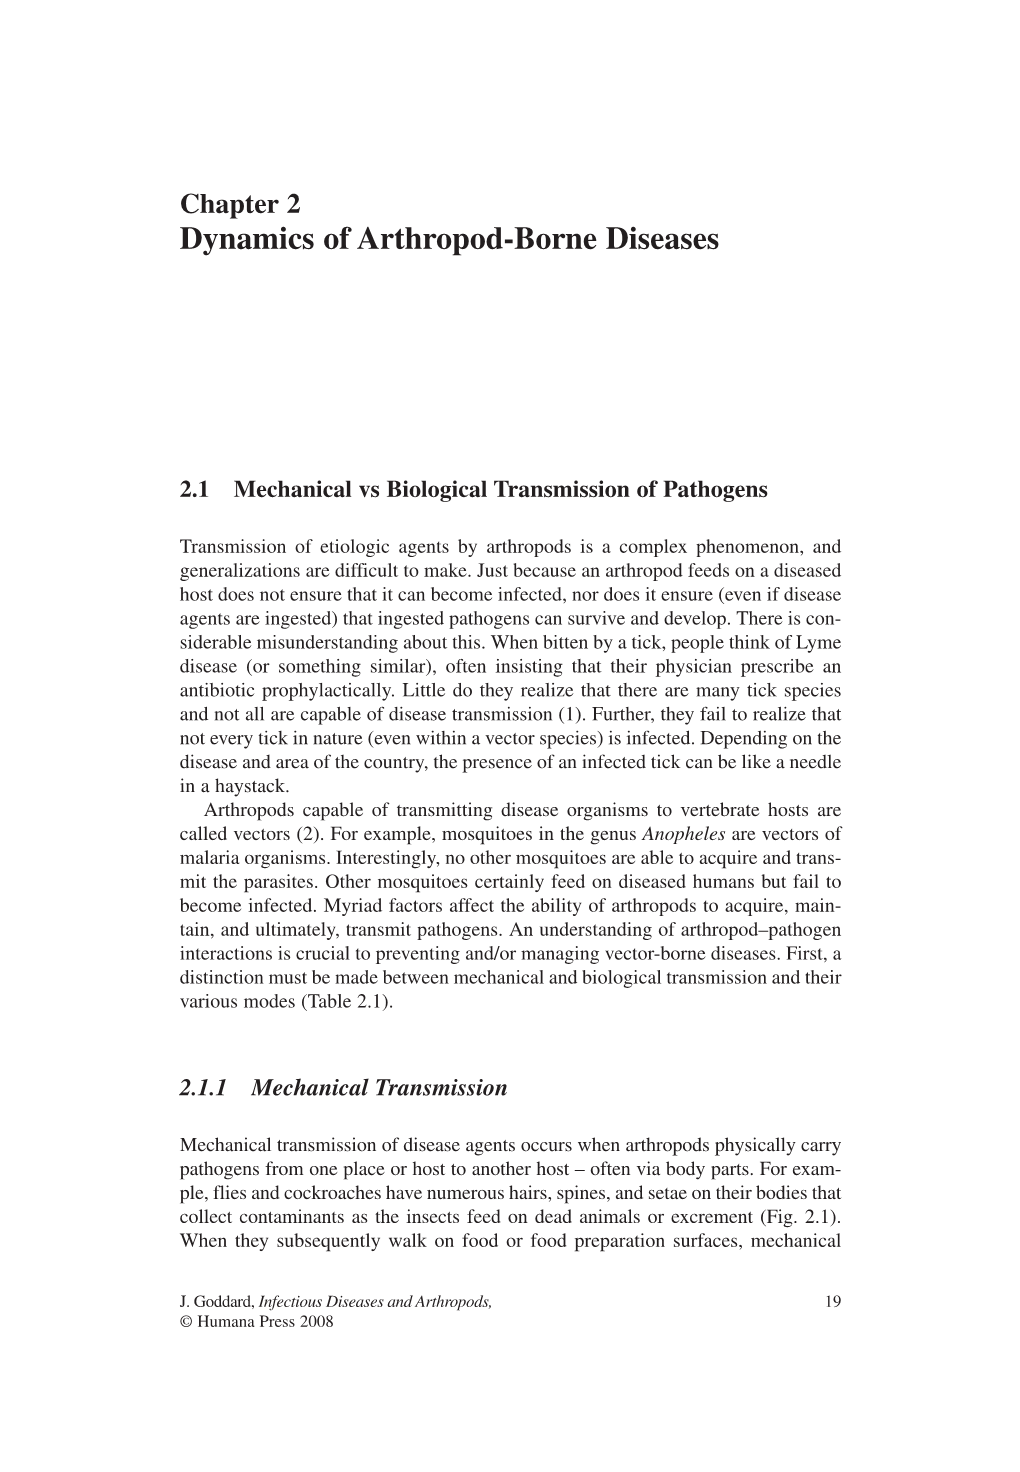 Dynamics of Arthropod-Borne Diseases